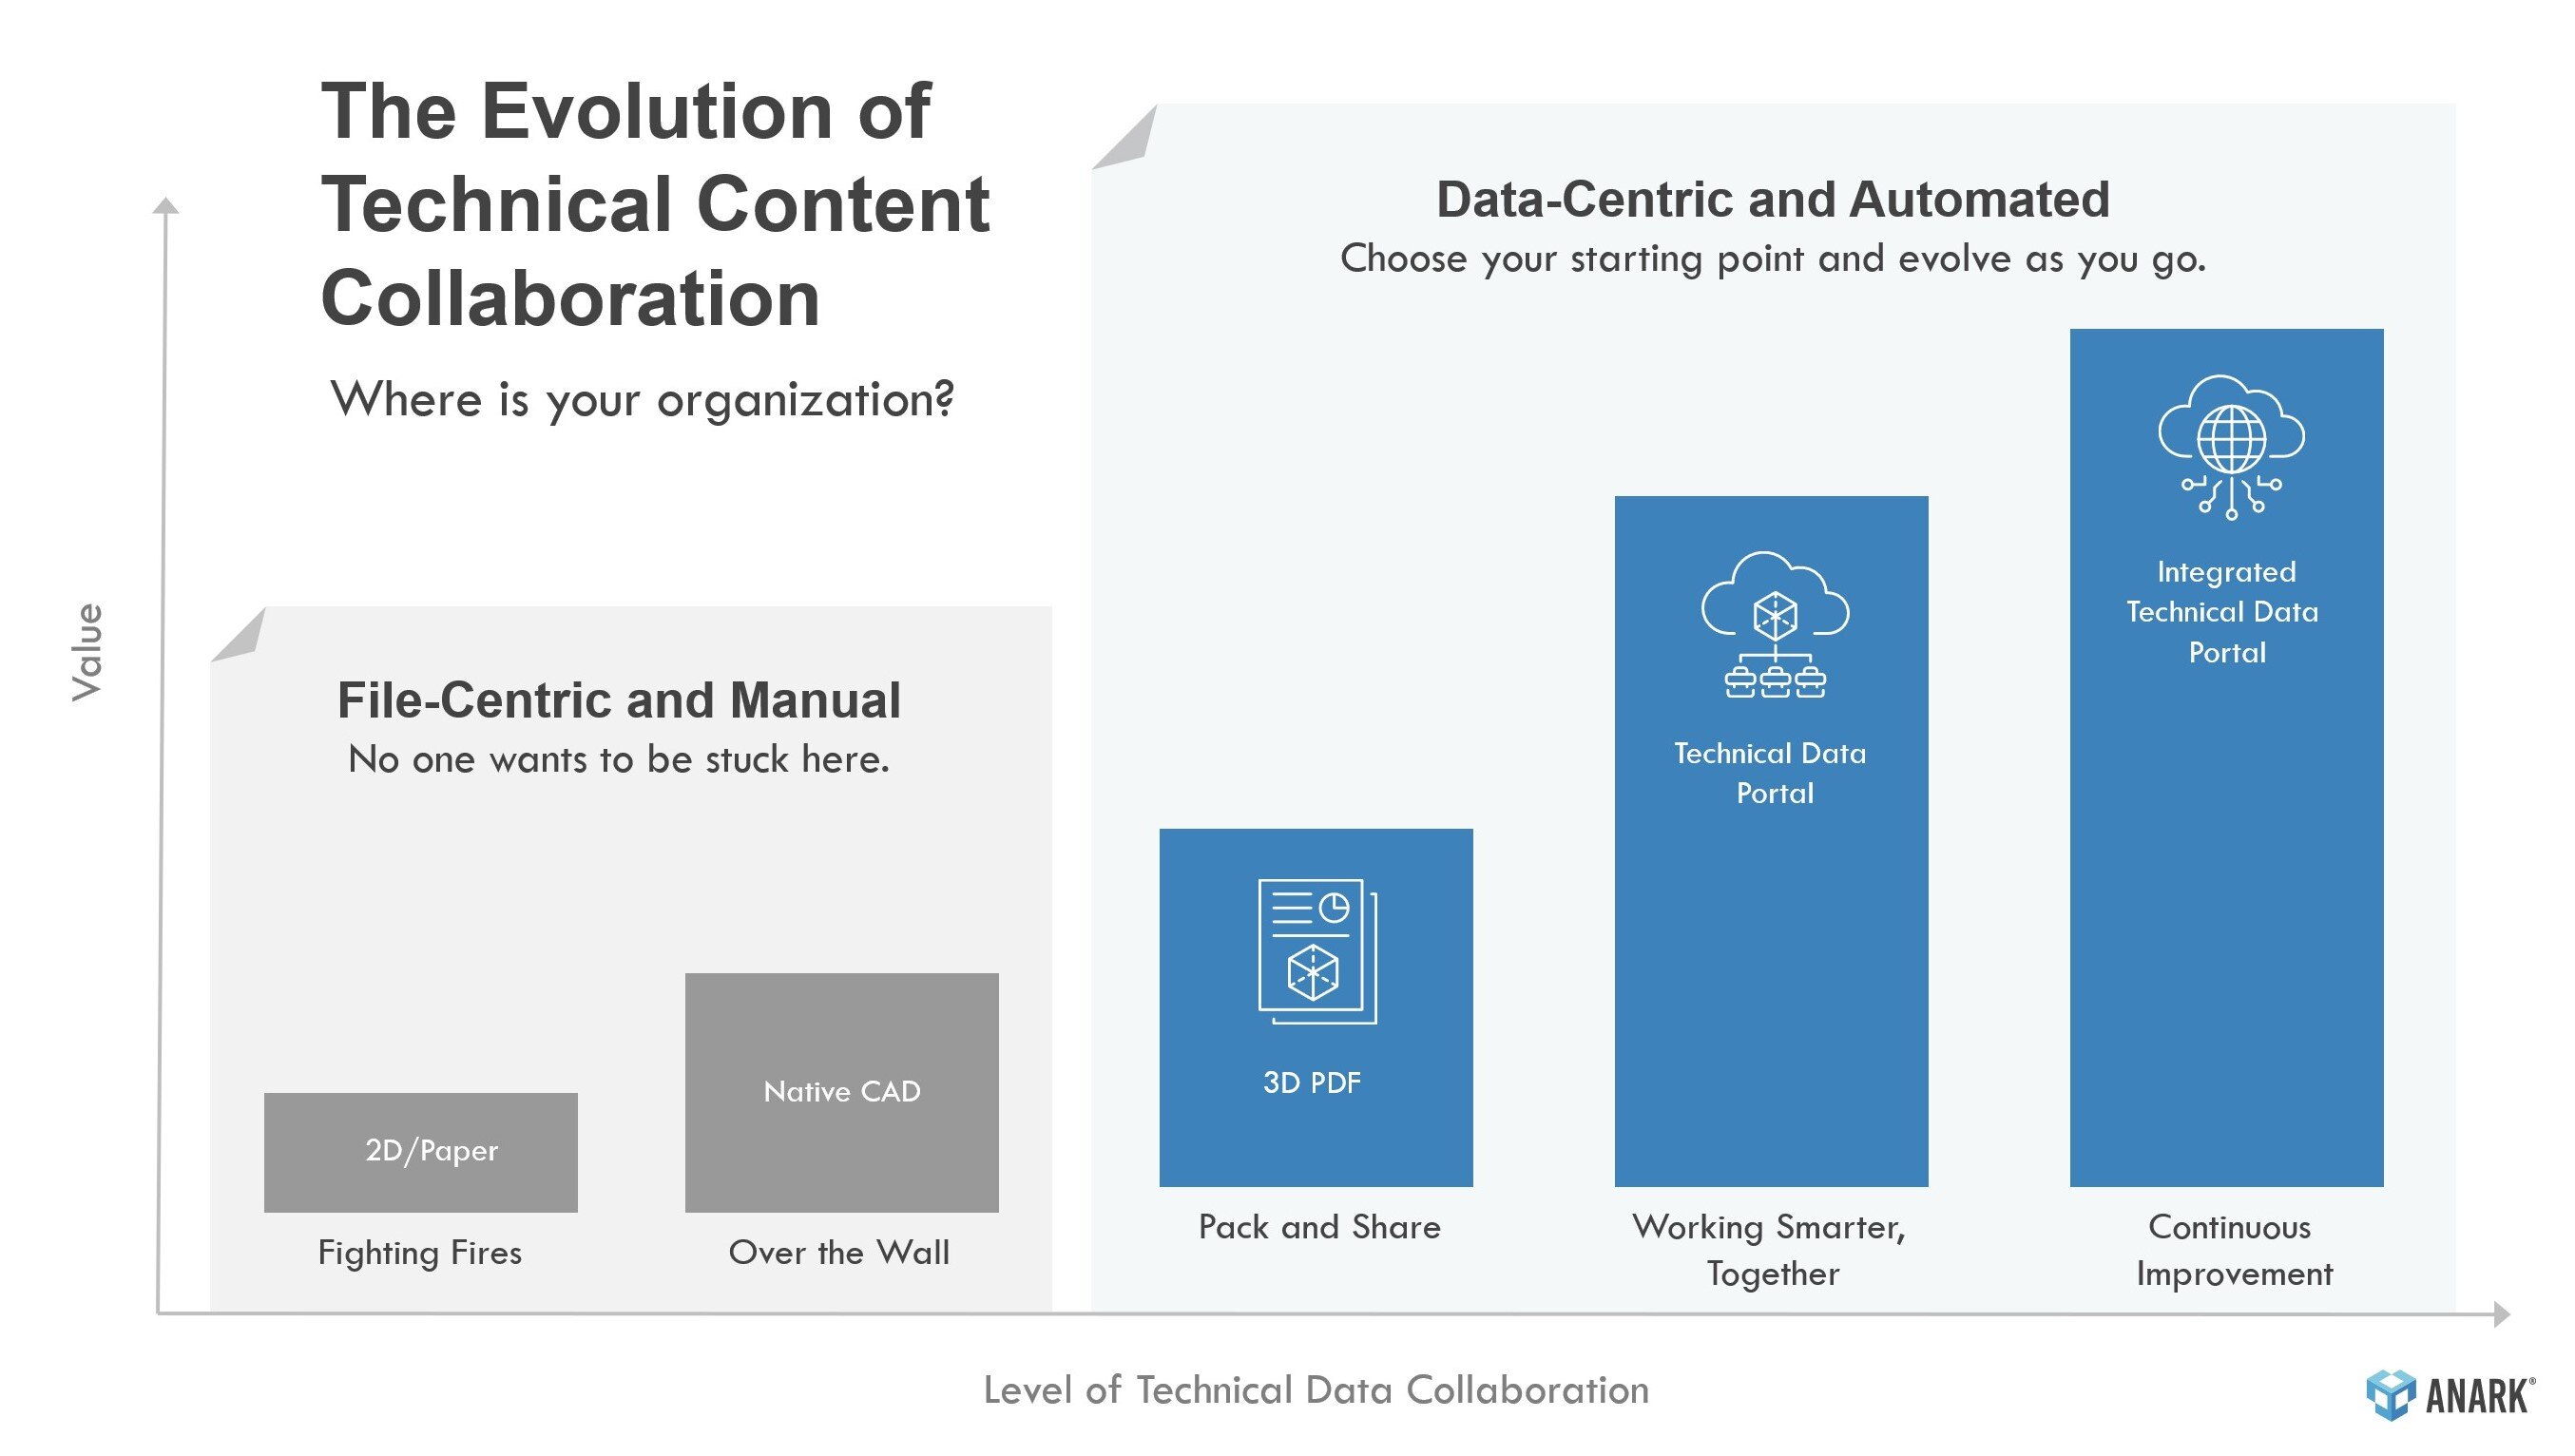 Technical Data Collaboration Maturity Model